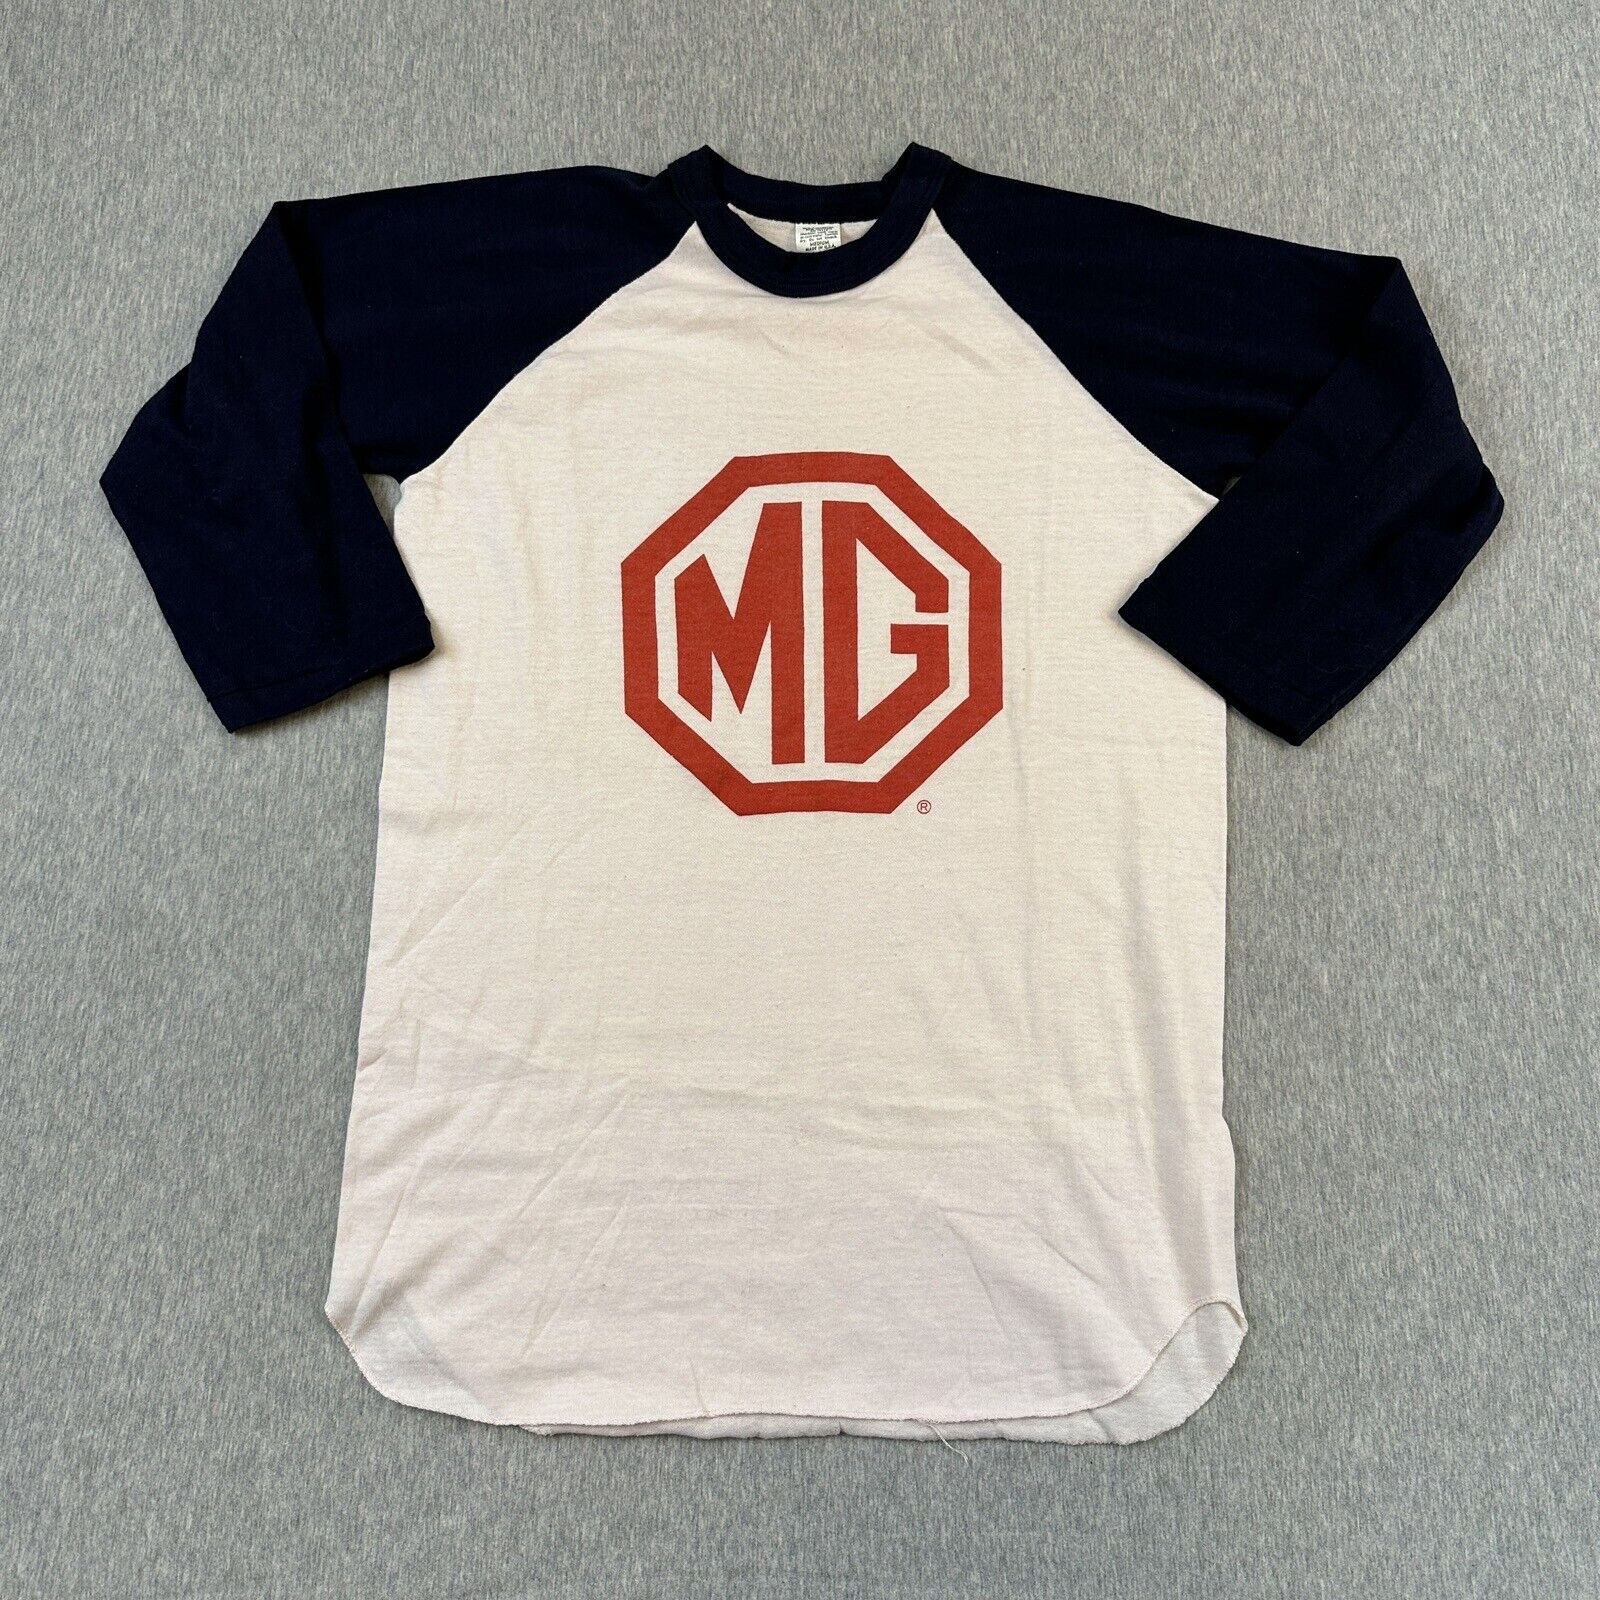 Vintage 1970's MG Motor Cars Long Sleeve Raglan Shirt - Sz Medium - Rare Look